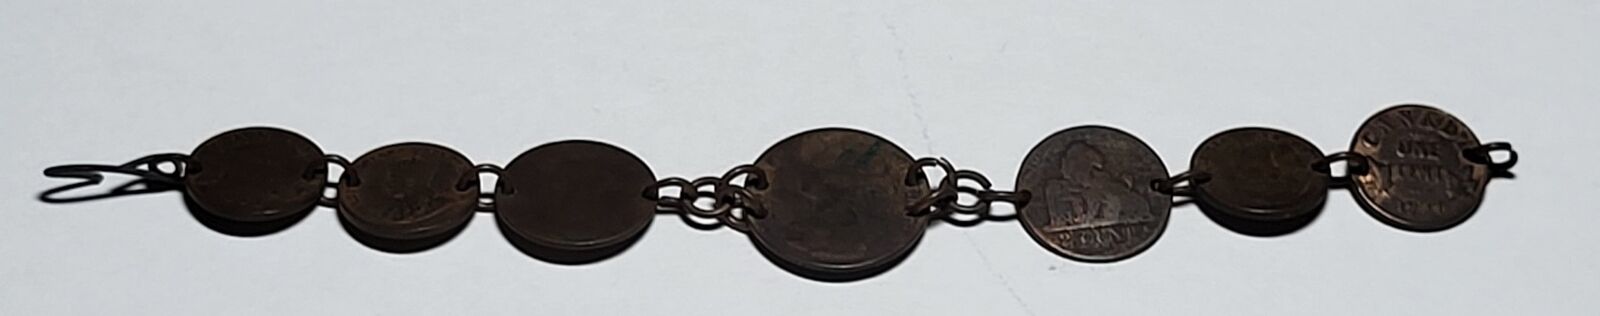 Vintage Copper Coin Bracelet Canada 1883-1932